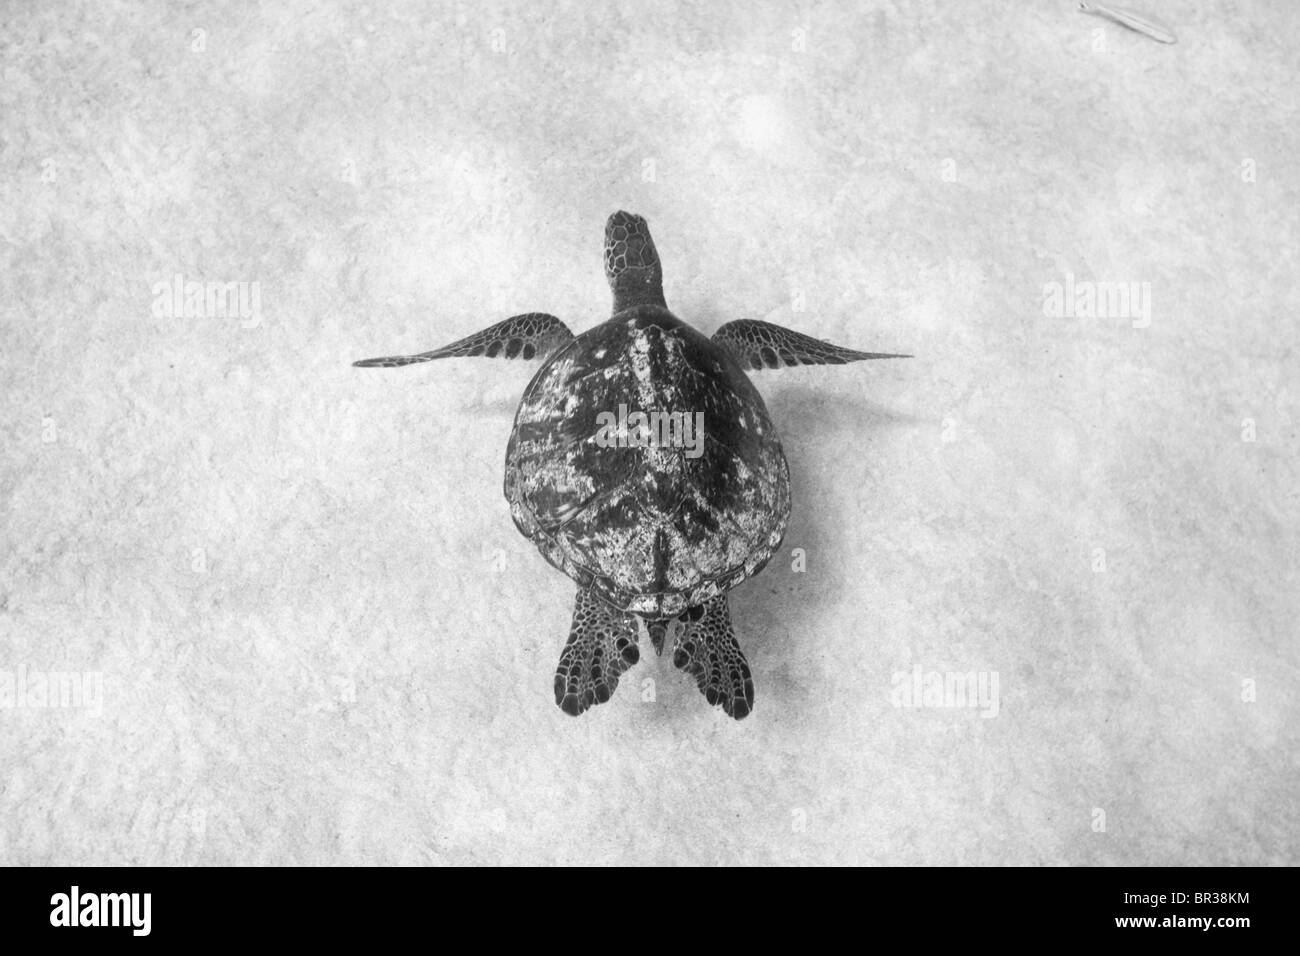 https://c8.alamy.com/comp/BR38KM/hawaiian-sea-turtle-BR38KM.jpg